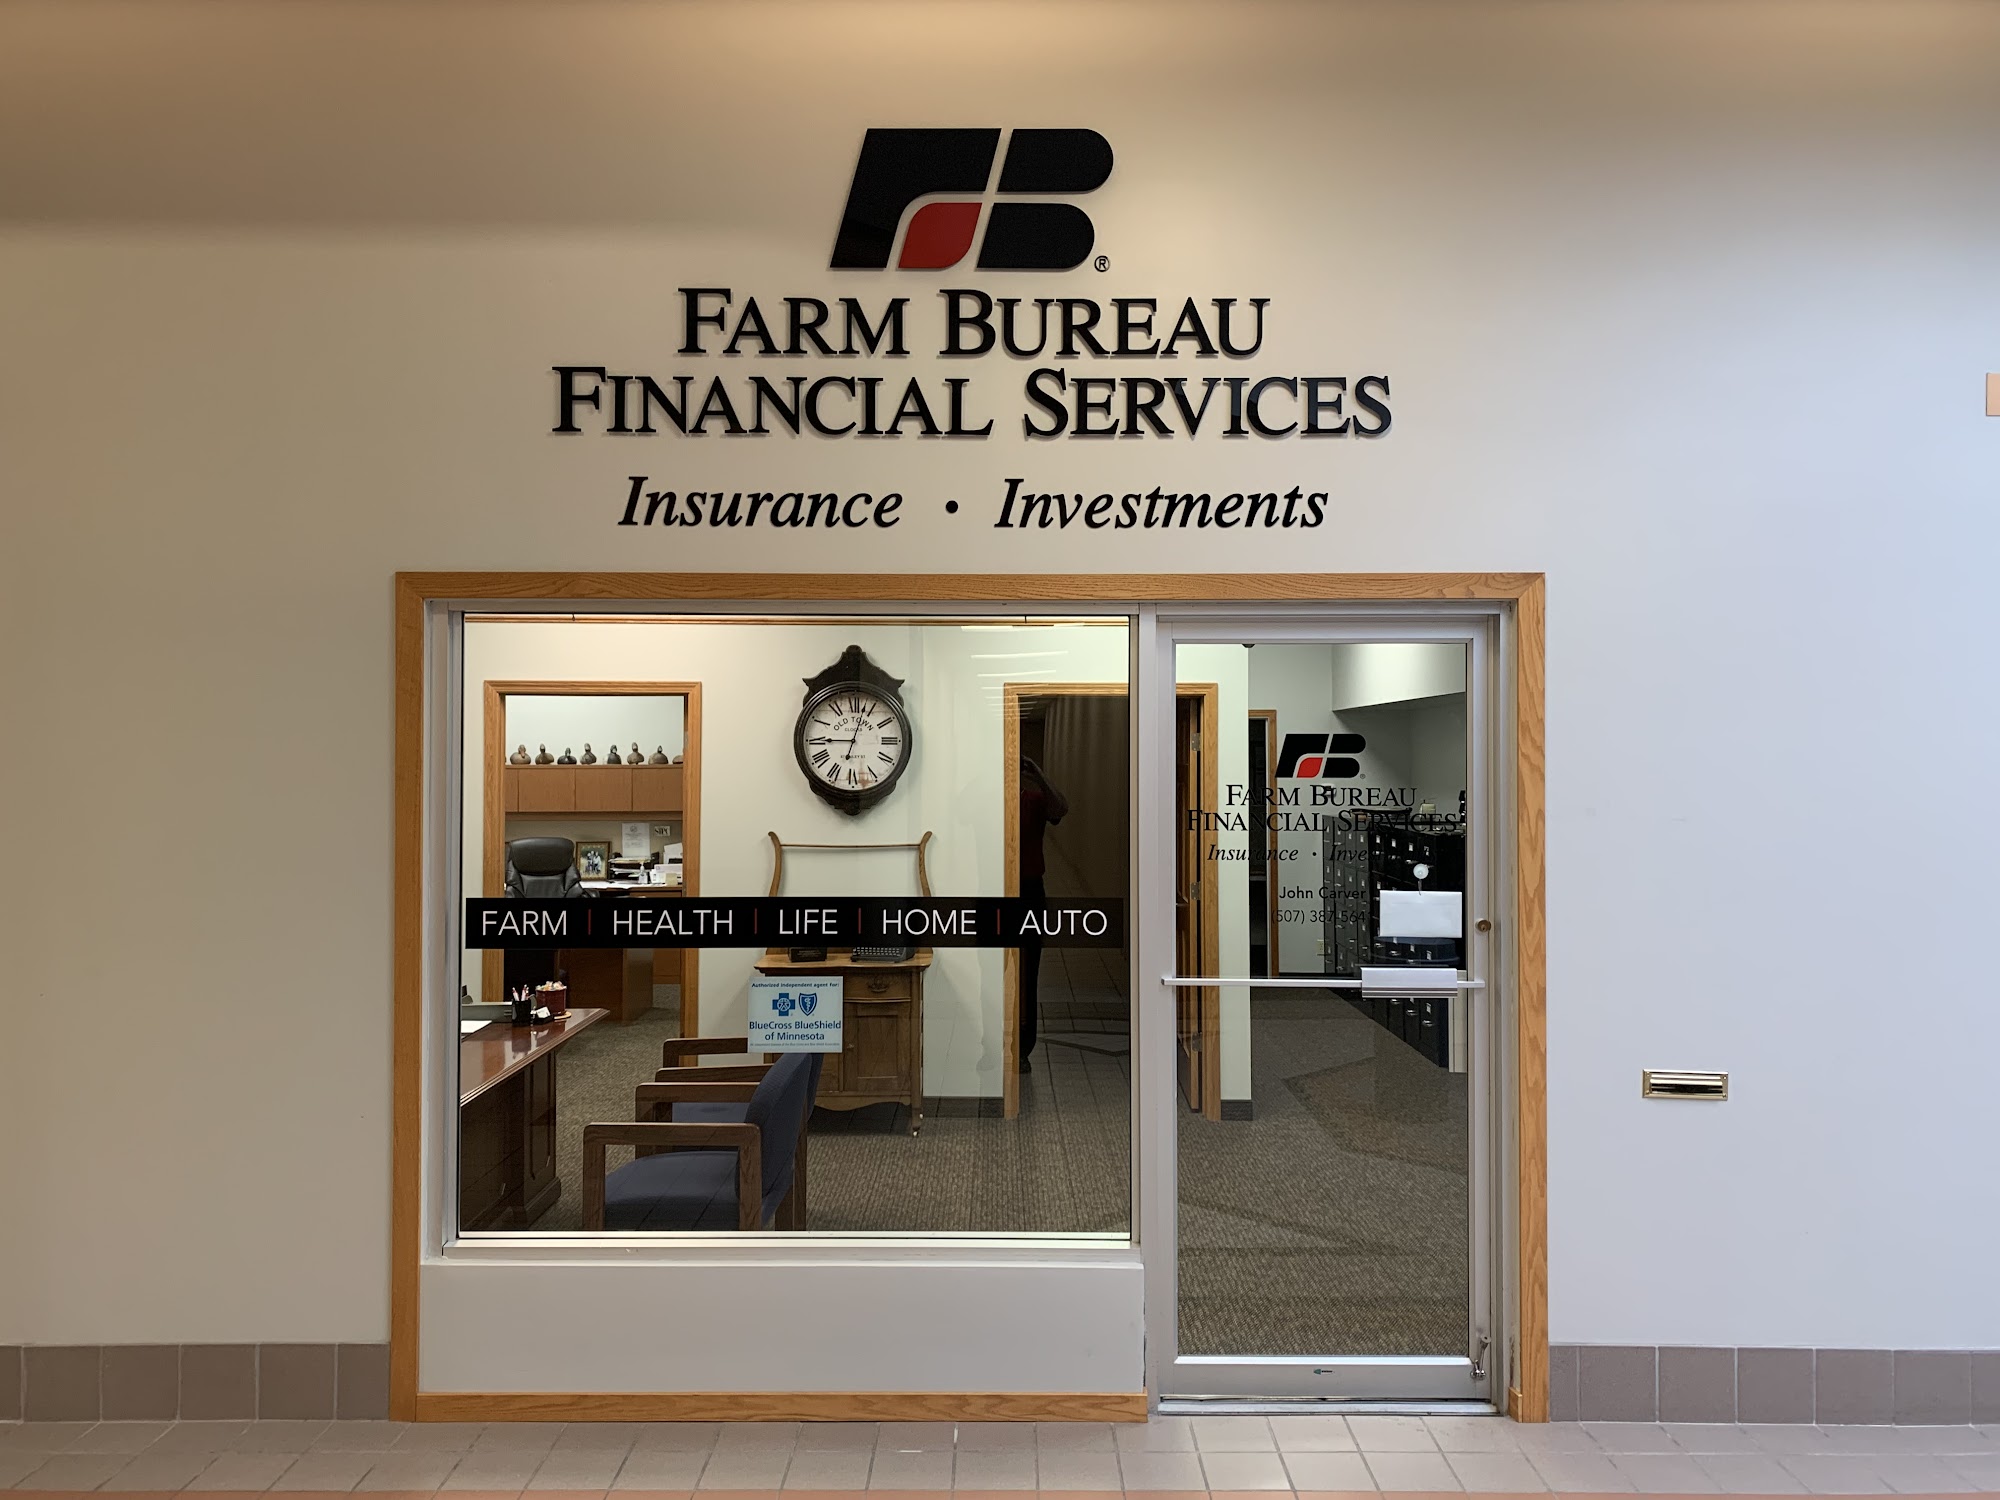 Farm Bureau Financial Services: John Carver